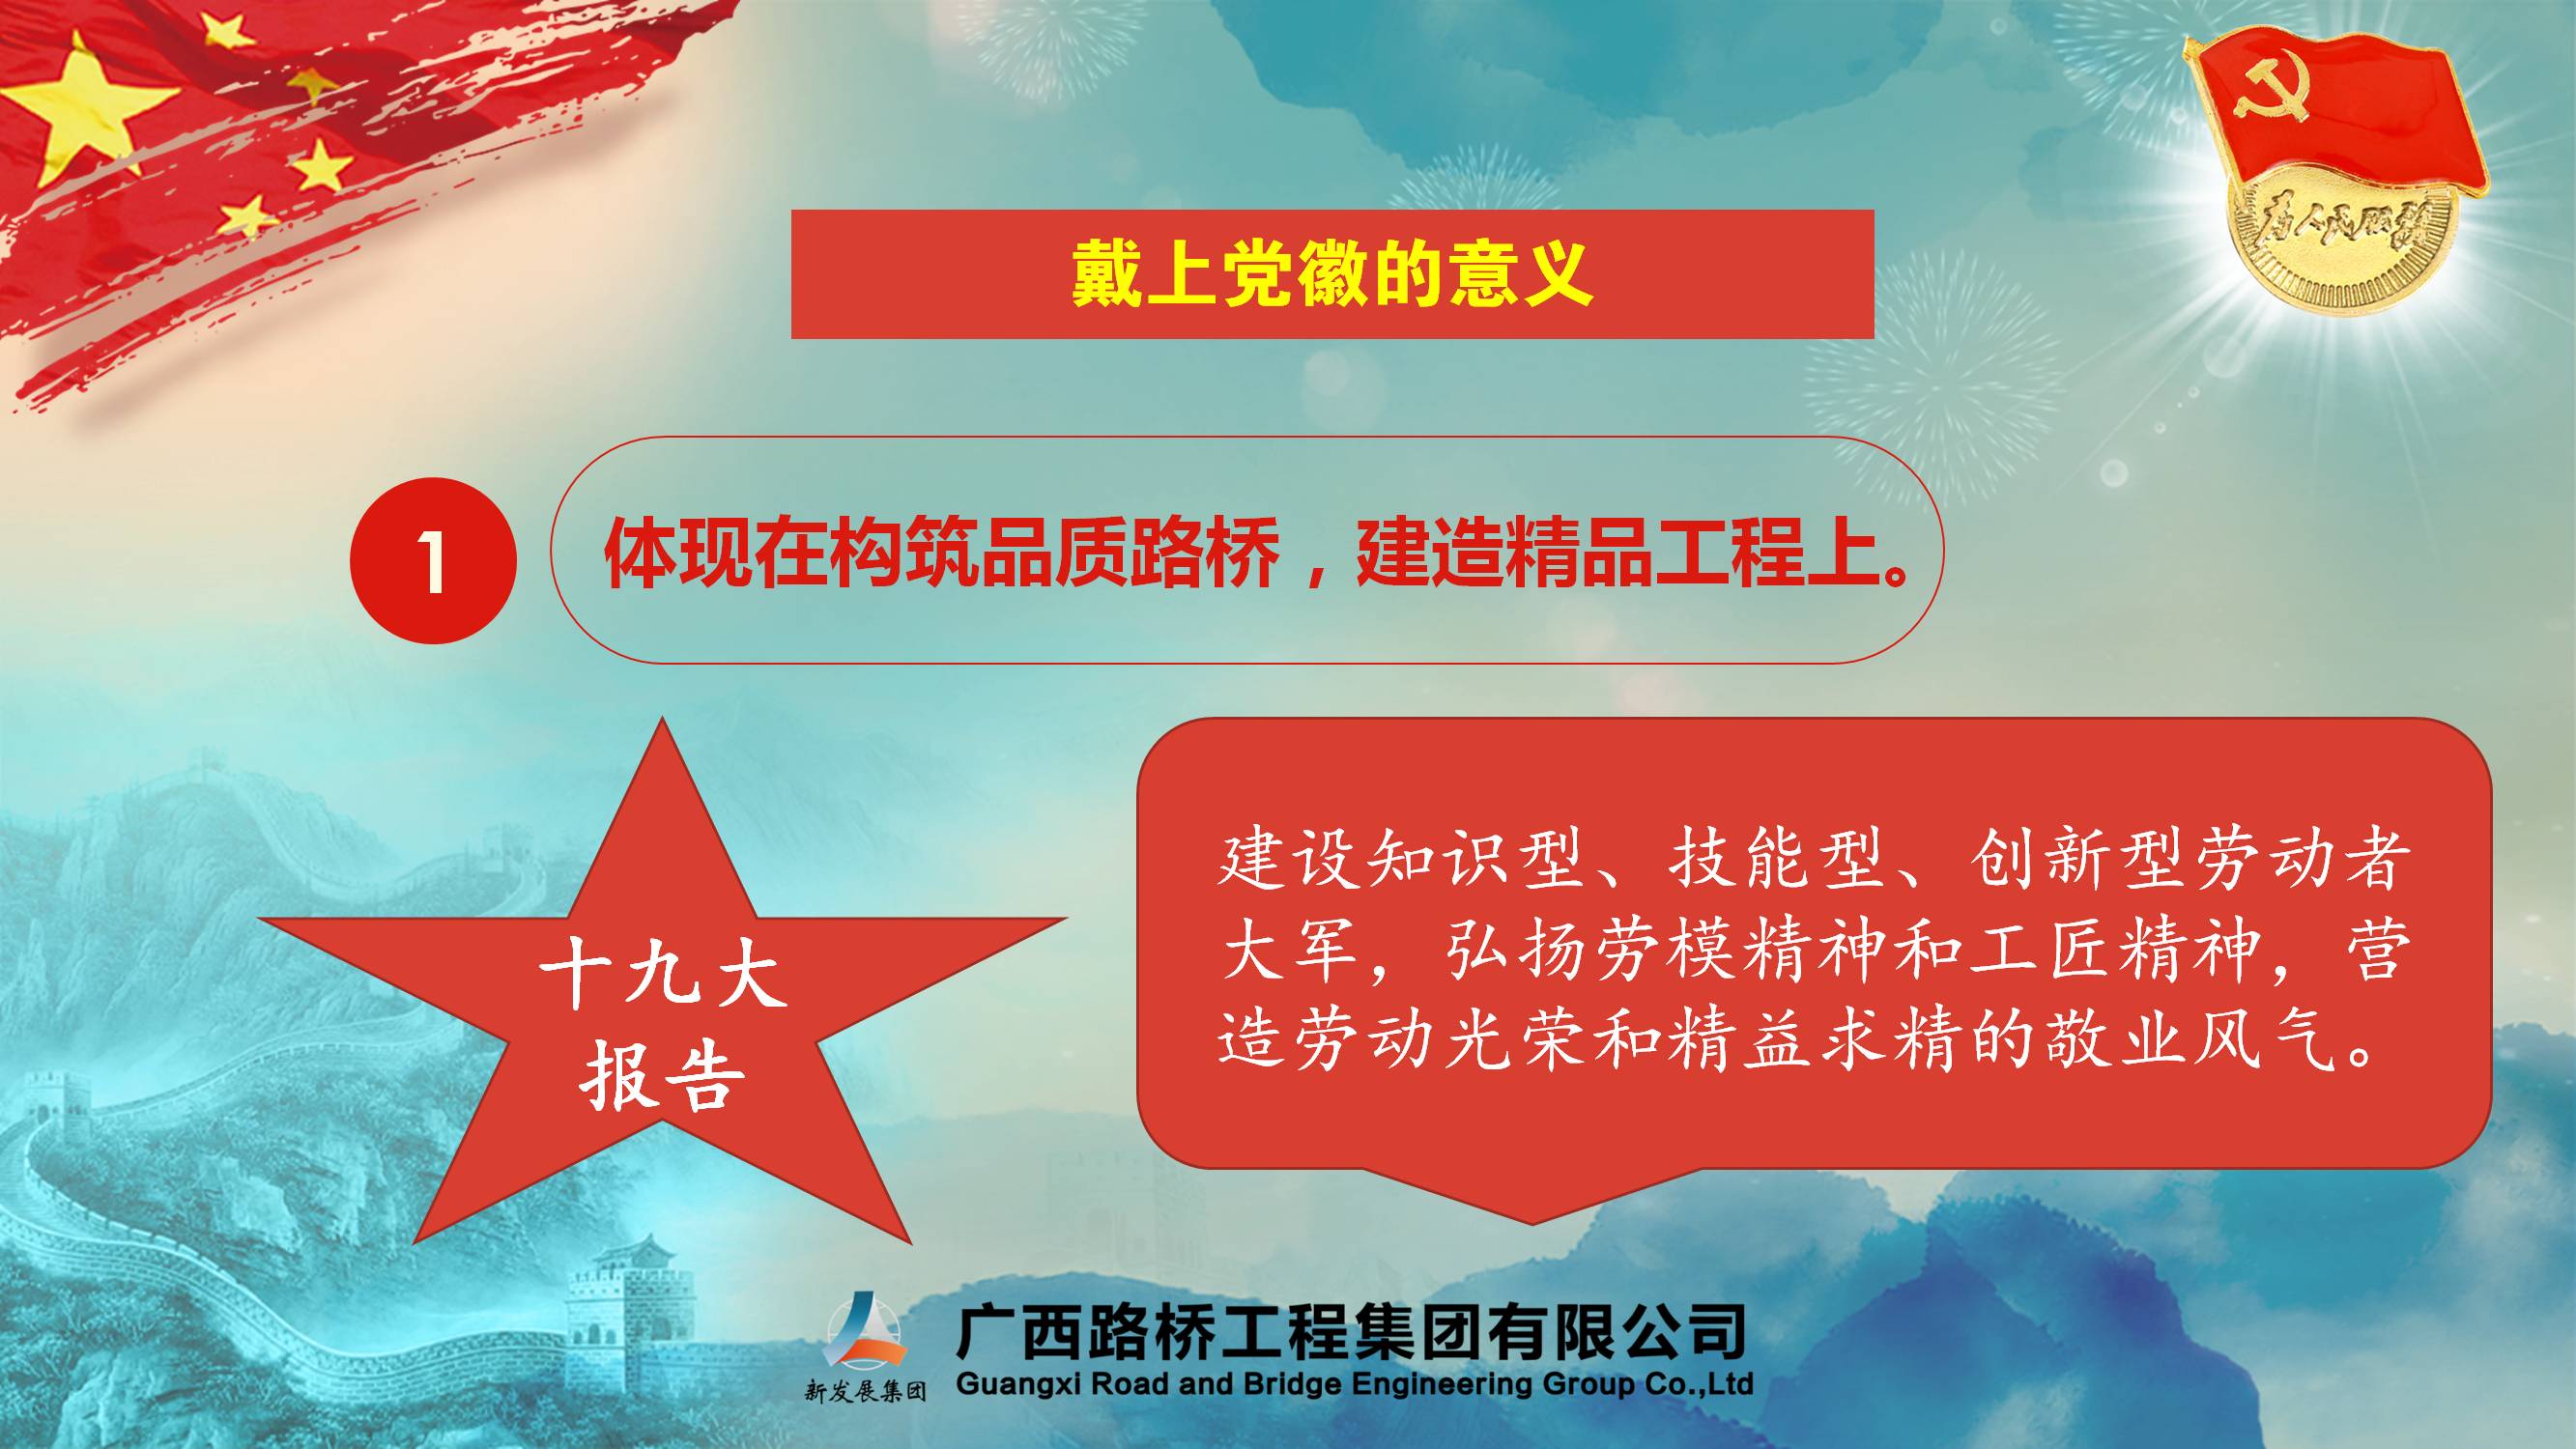 [PPT]广西路桥工程集团有限公司《戴党徽 亮身份 敢担当》